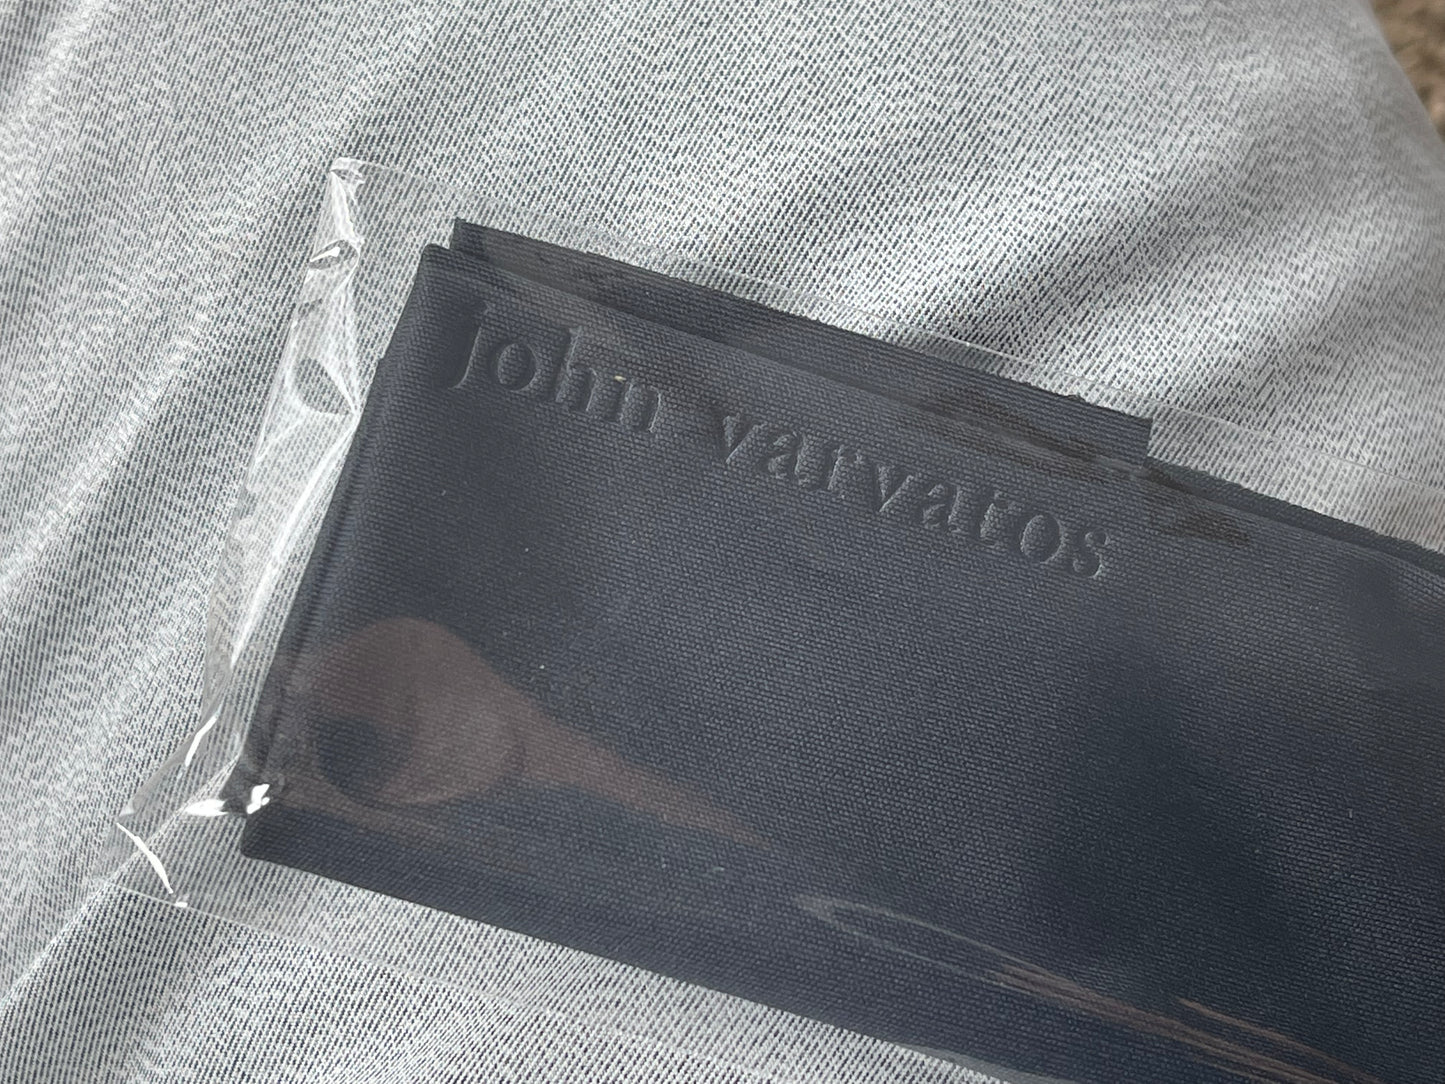 John Varvatos Bowery Sunglasses Black Tortoise made in Japan